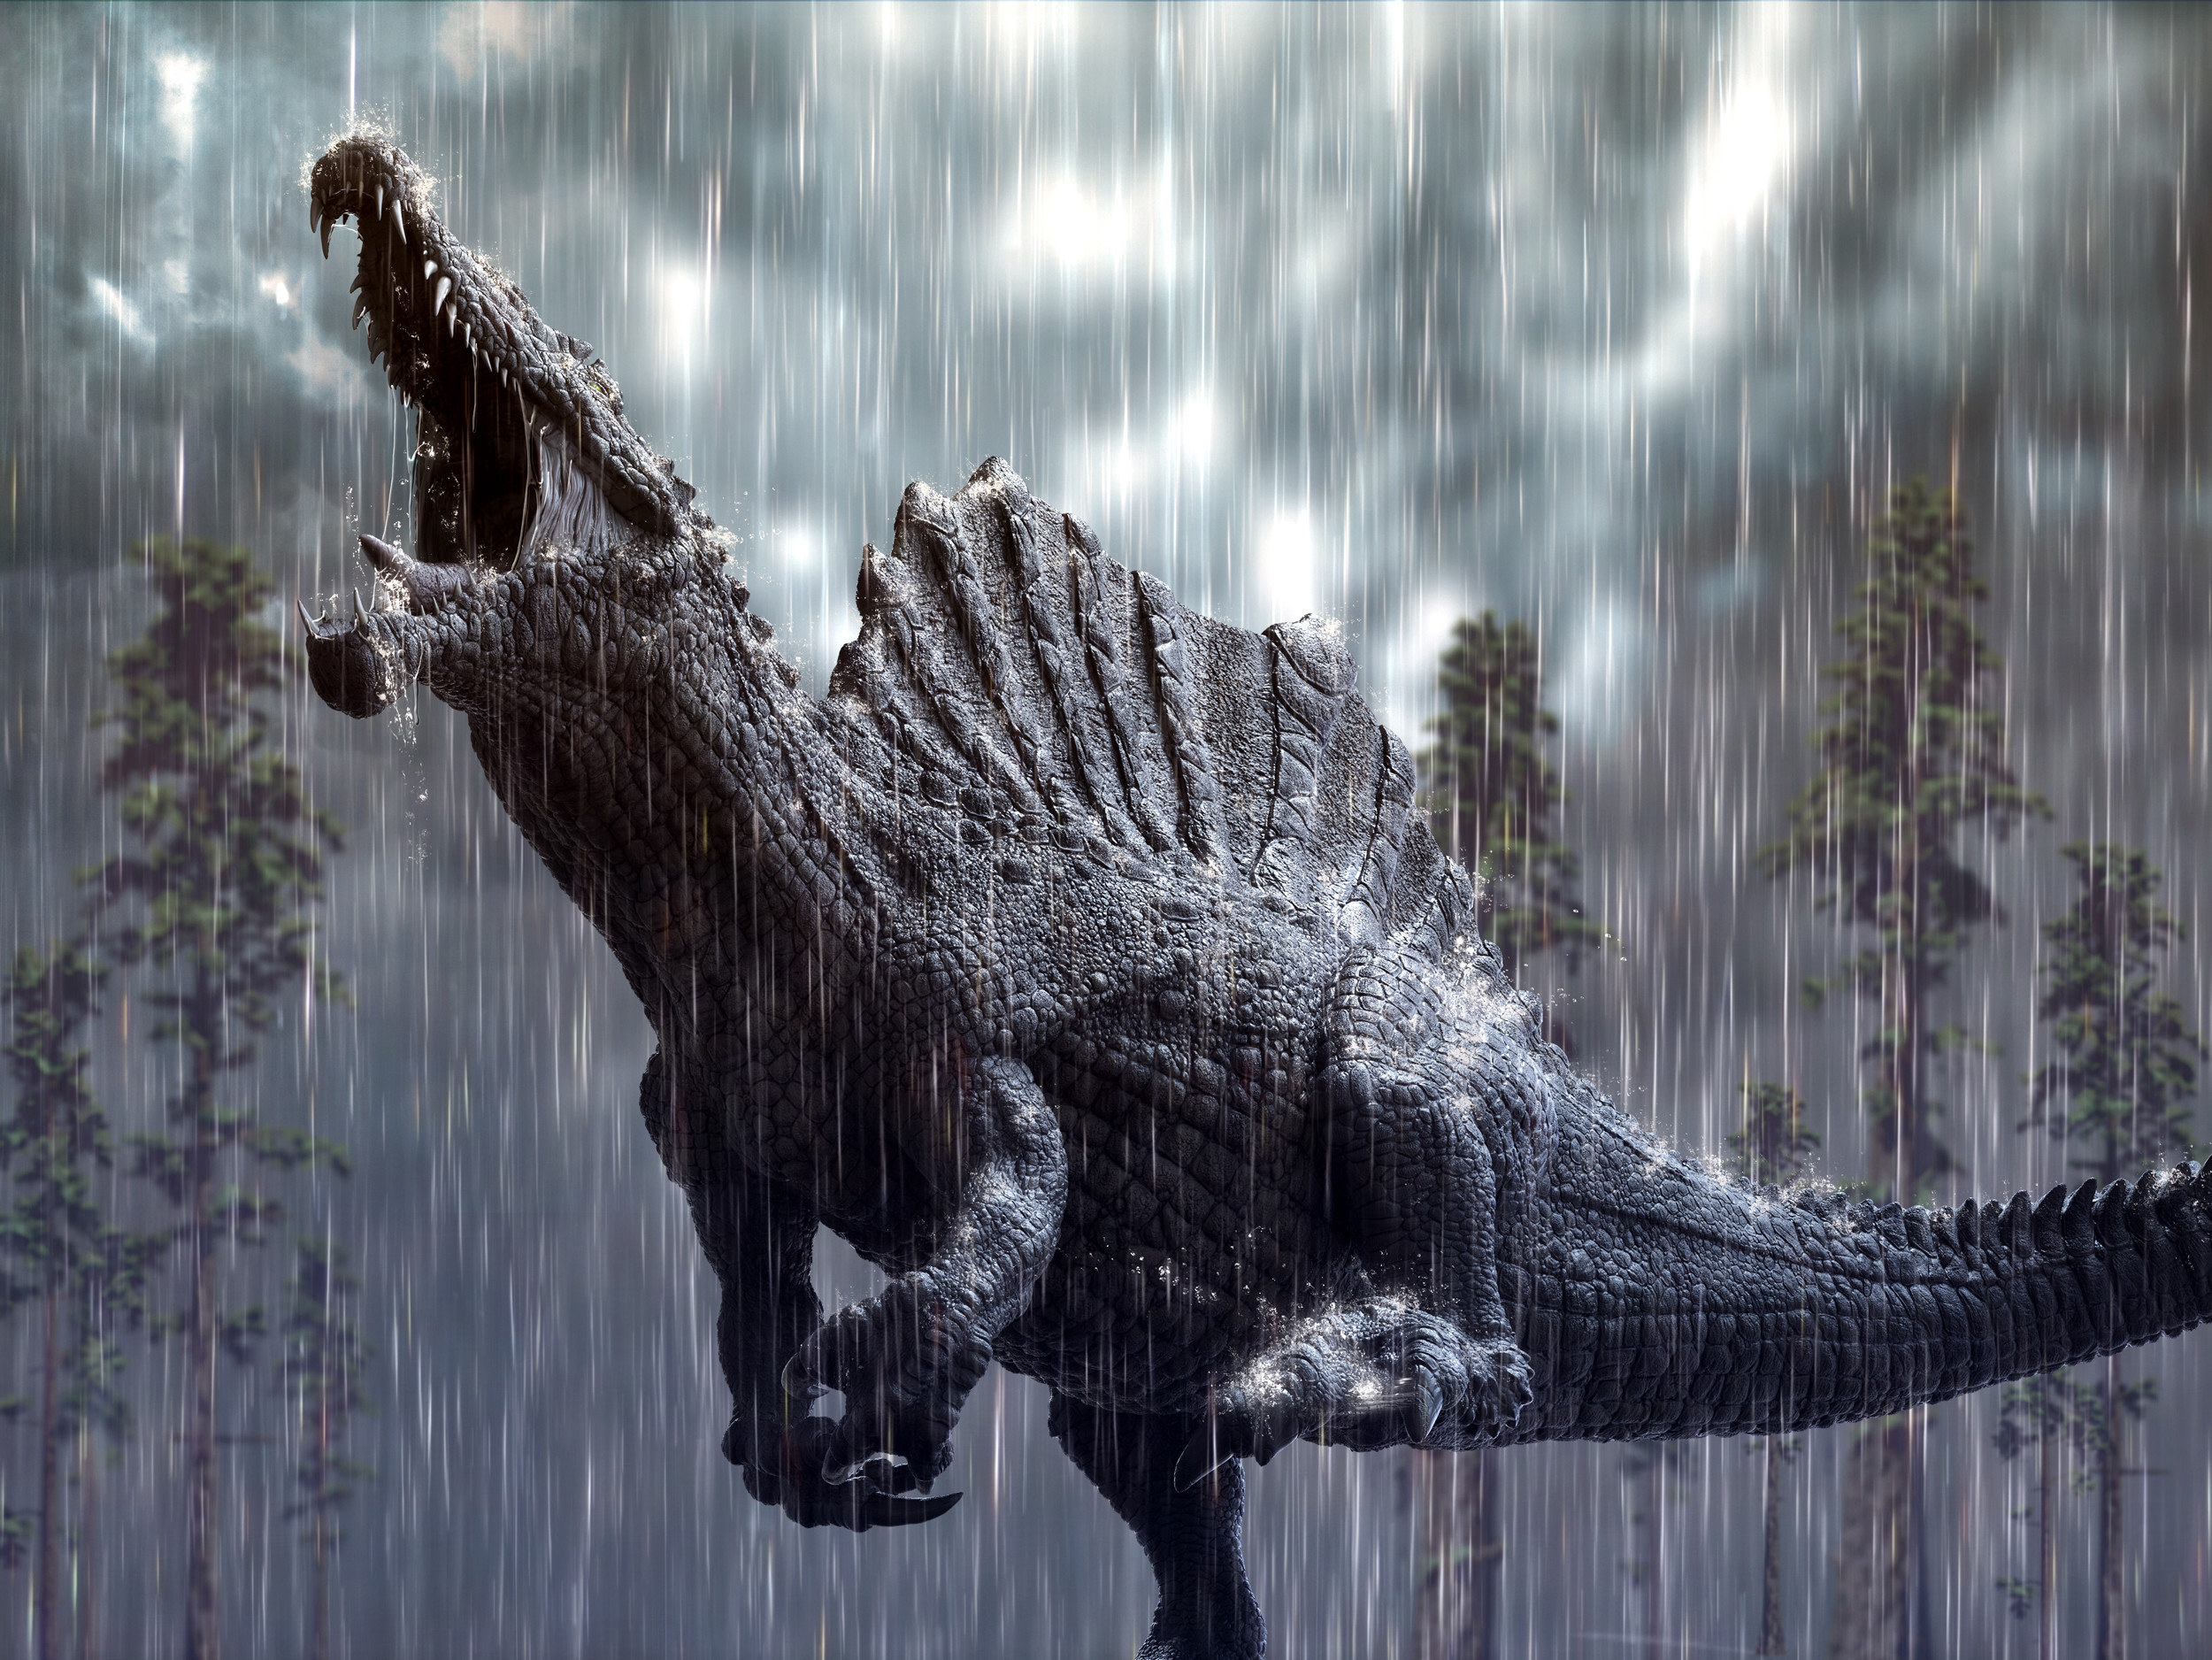 Spinosaurus wallpaper, High-quality image, Striking artwork, Dino lover's delight, 2500x1880 HD Desktop